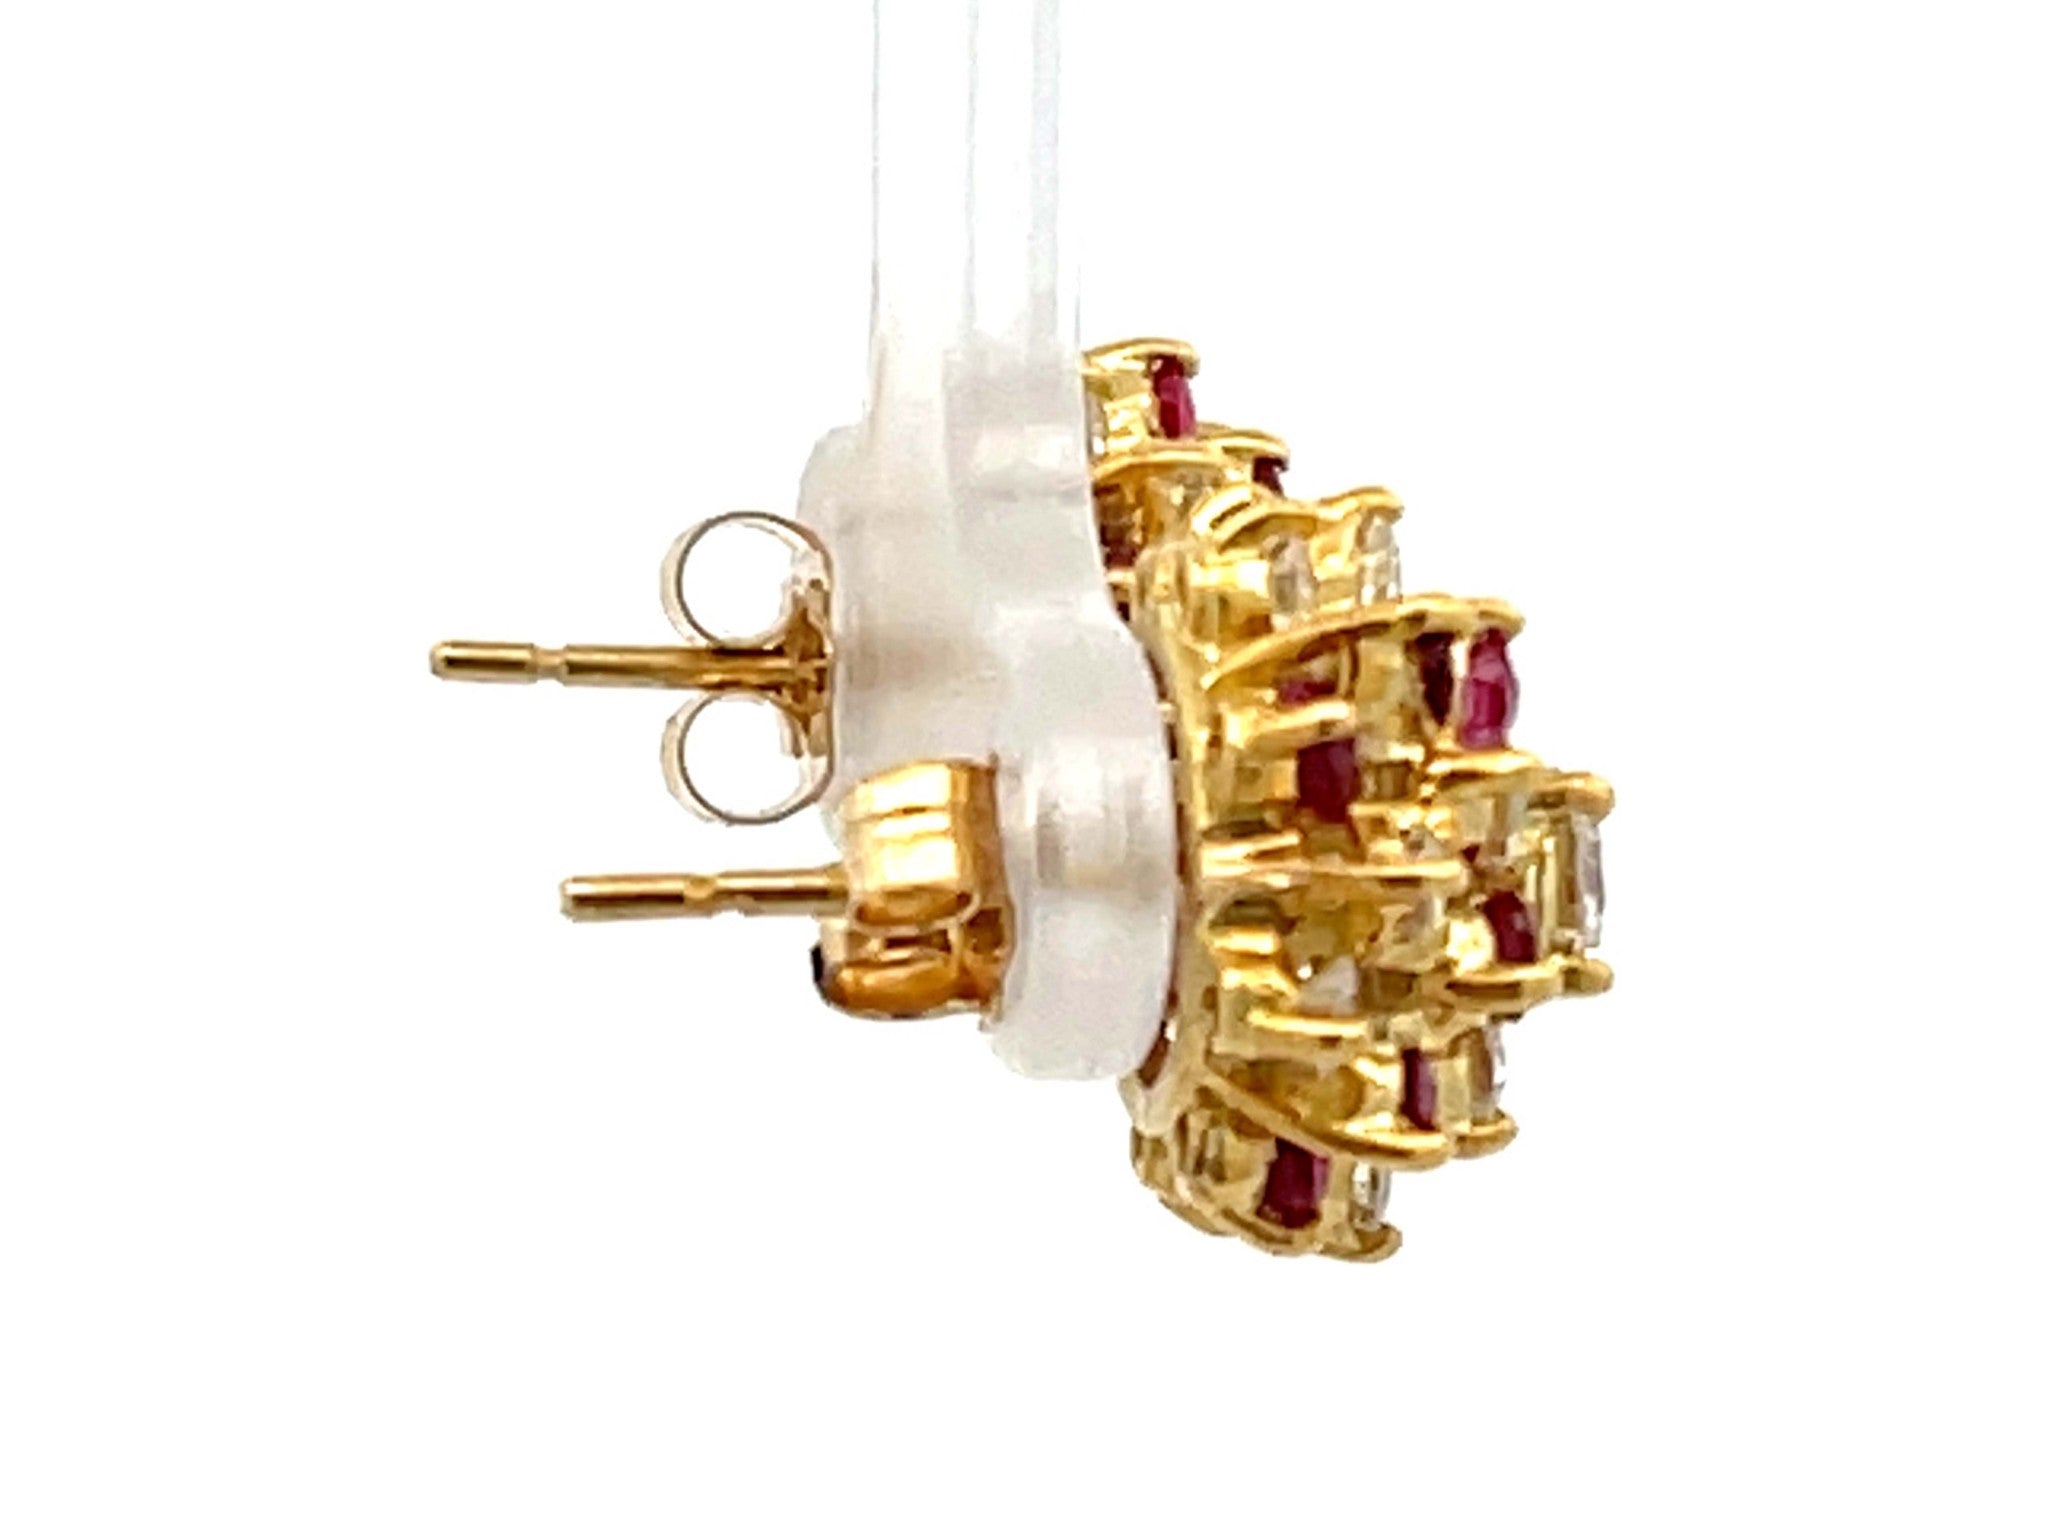 Ruby and Diamond Flower Earrings in 14k Yellow Gold